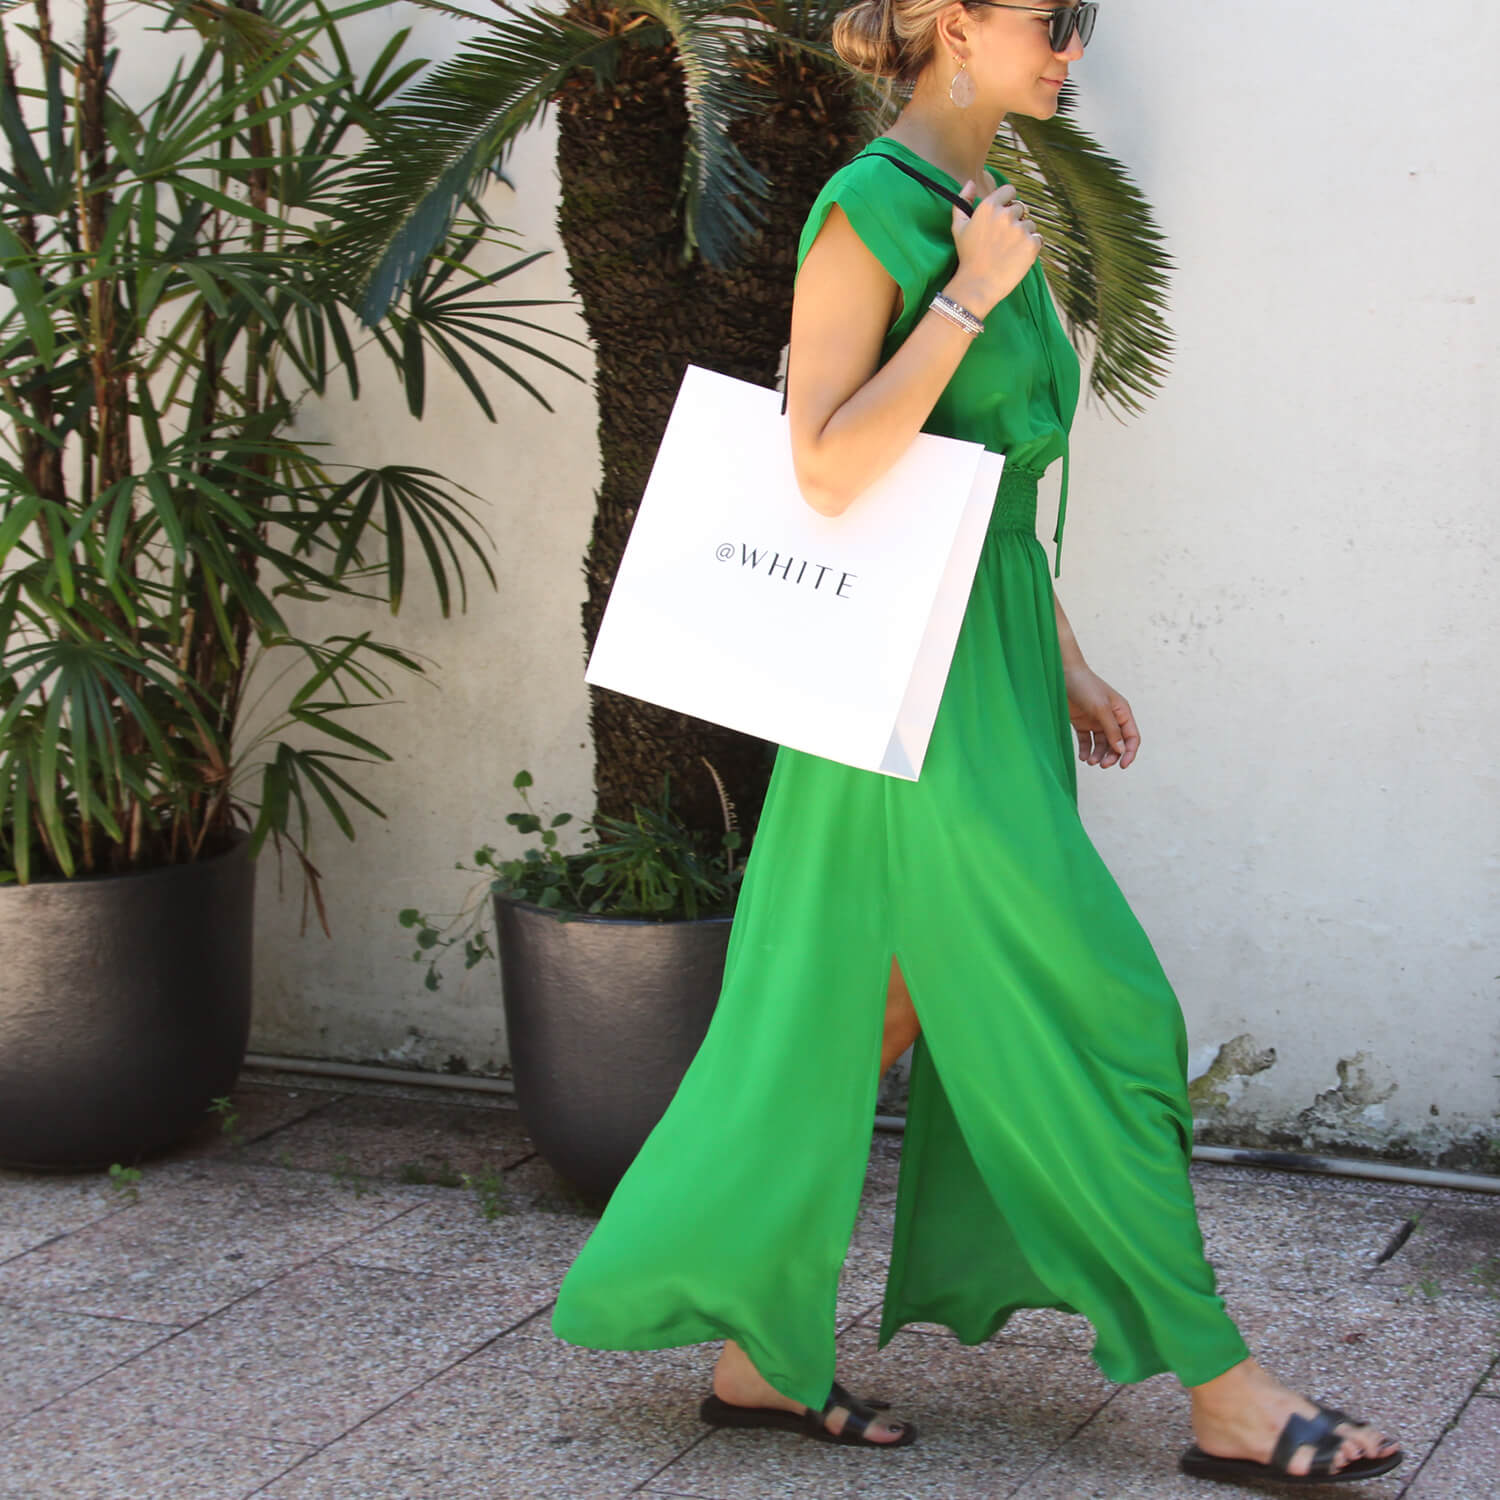 “BALI” SILK DRESS - Green